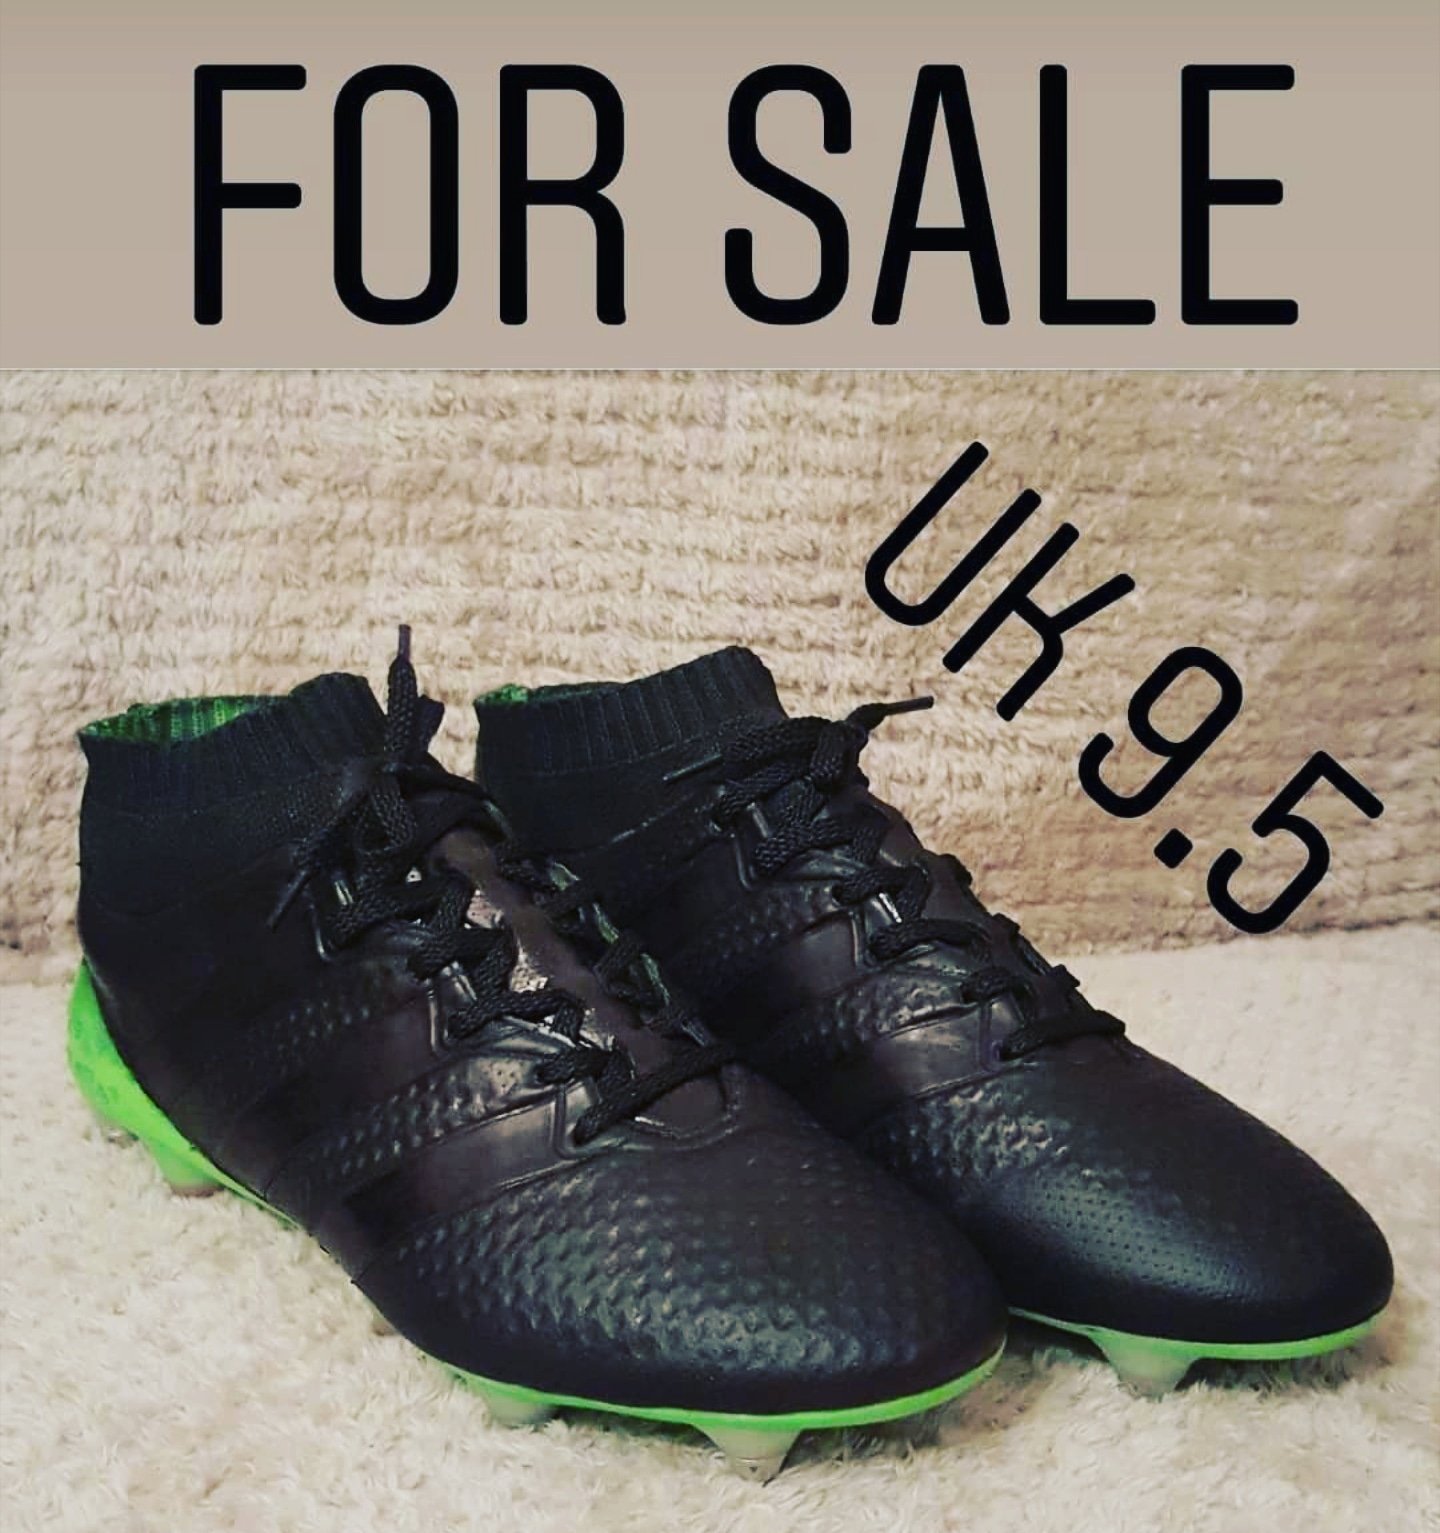 Blackoutboots89⚽️ on Twitter: "✖ FOR SALE ✖ Adidas ACE 16.1 UK size 9.5 SG soleplate - Link bio!! - #adidas #ACE #predator #football #soccer #footy #footballboots #cleats #blackandgreen #custom #